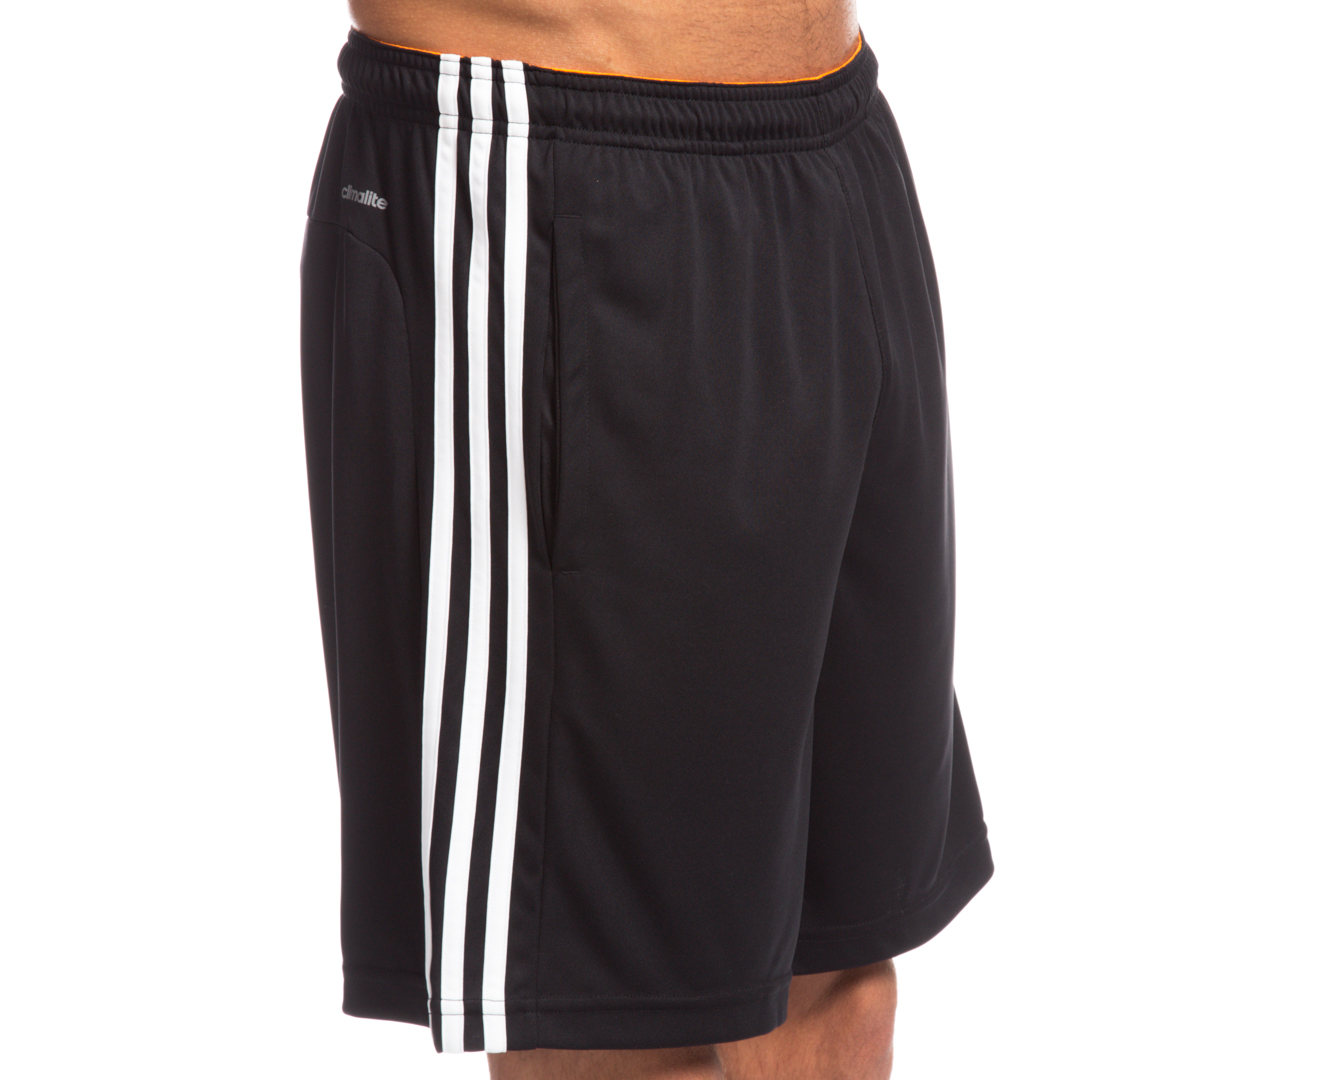 Adidas Men's 3 Stripe Climalite Shorts - Black | Catch.com.au